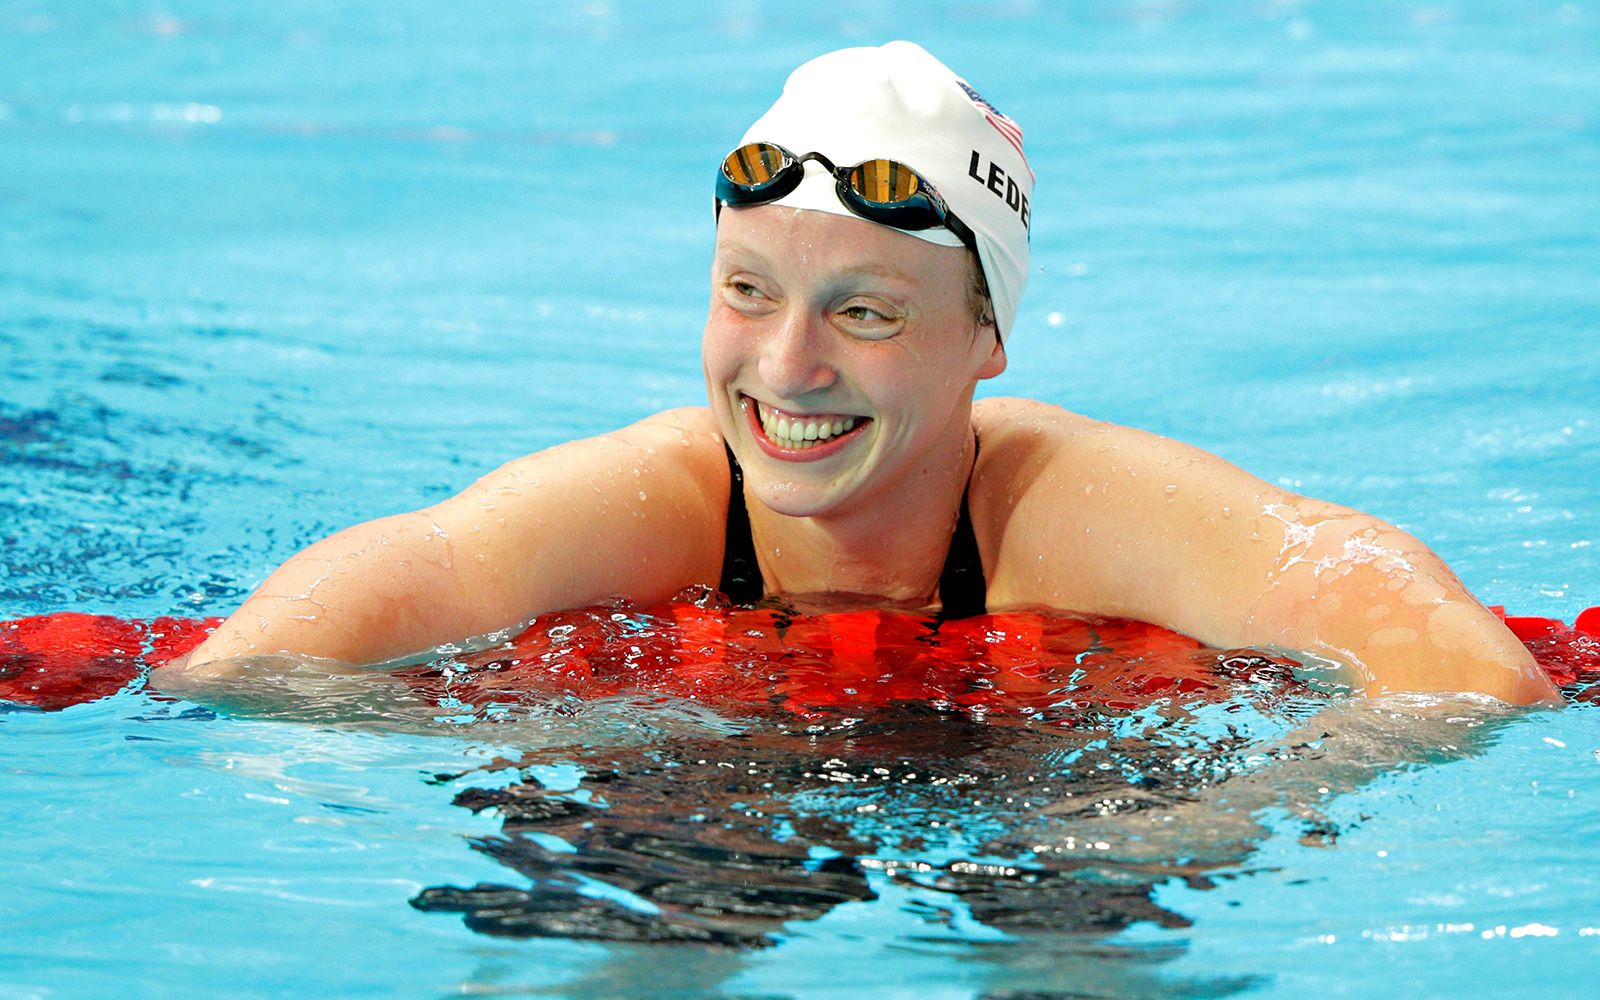 What makes Olympic swimmer Katie Ledecky so remarkable?